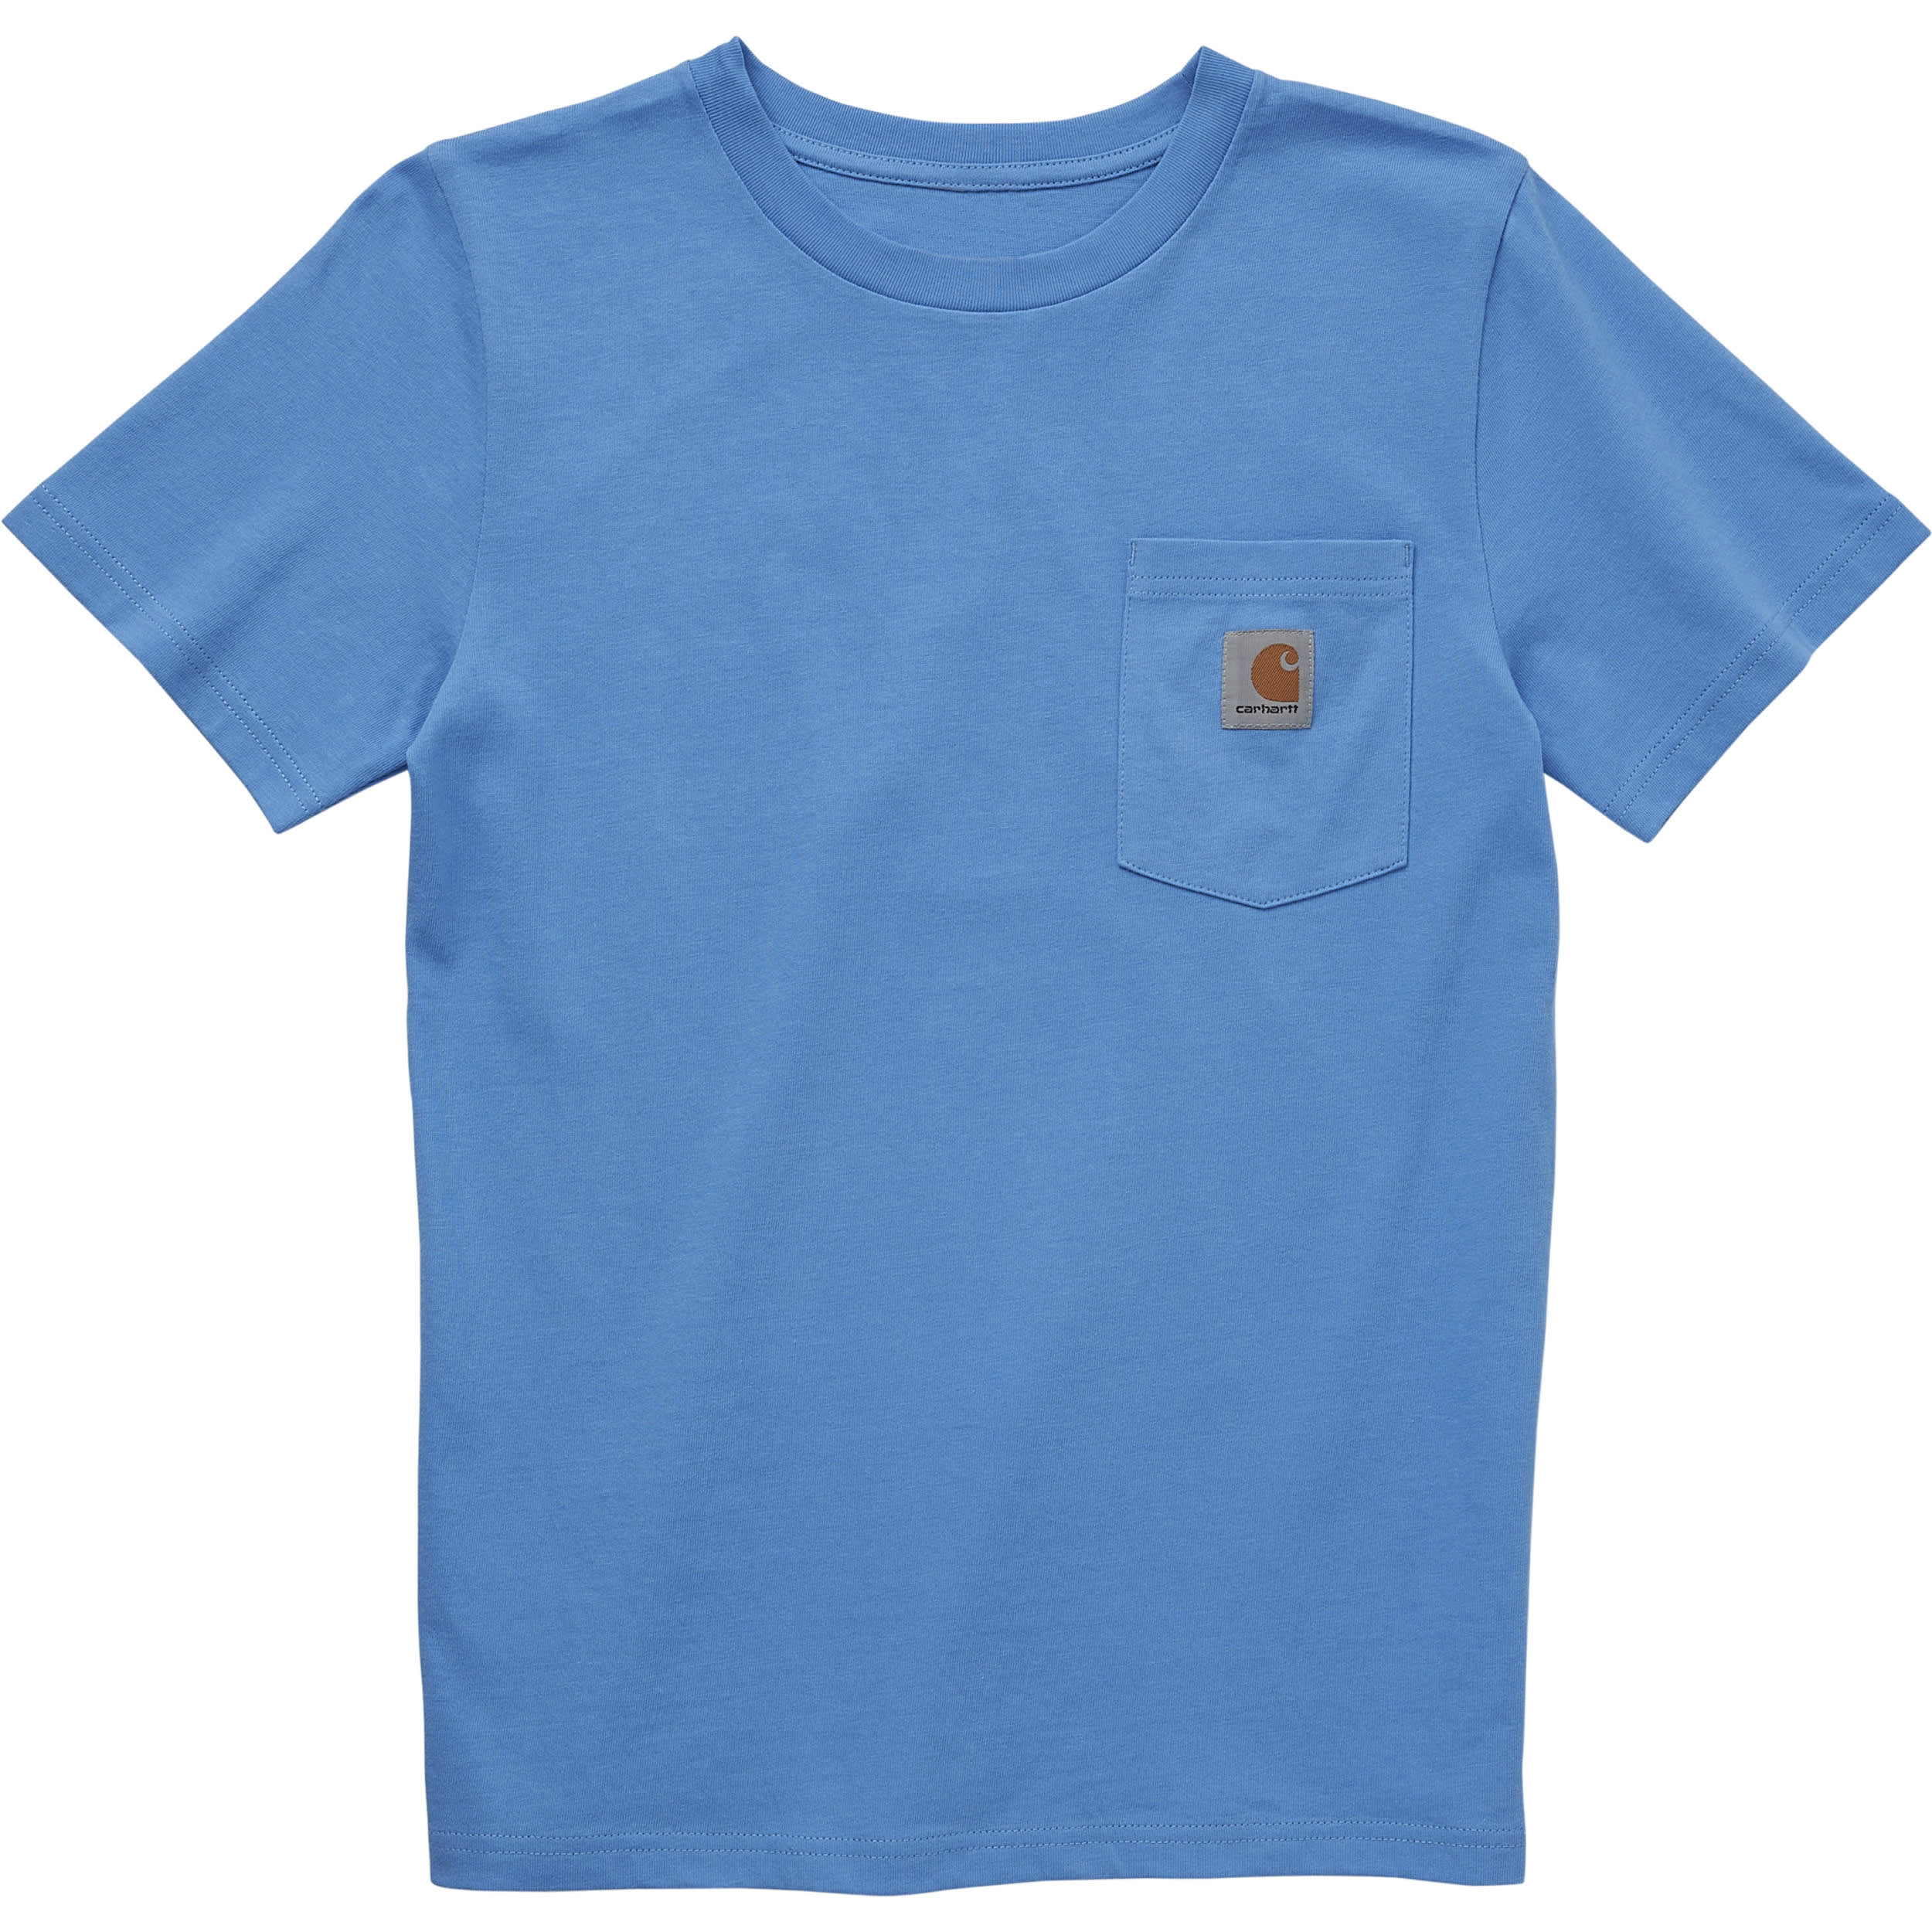 Carhartt® Toddler Boys’ Outfish Short-Sleeve T-Shirt